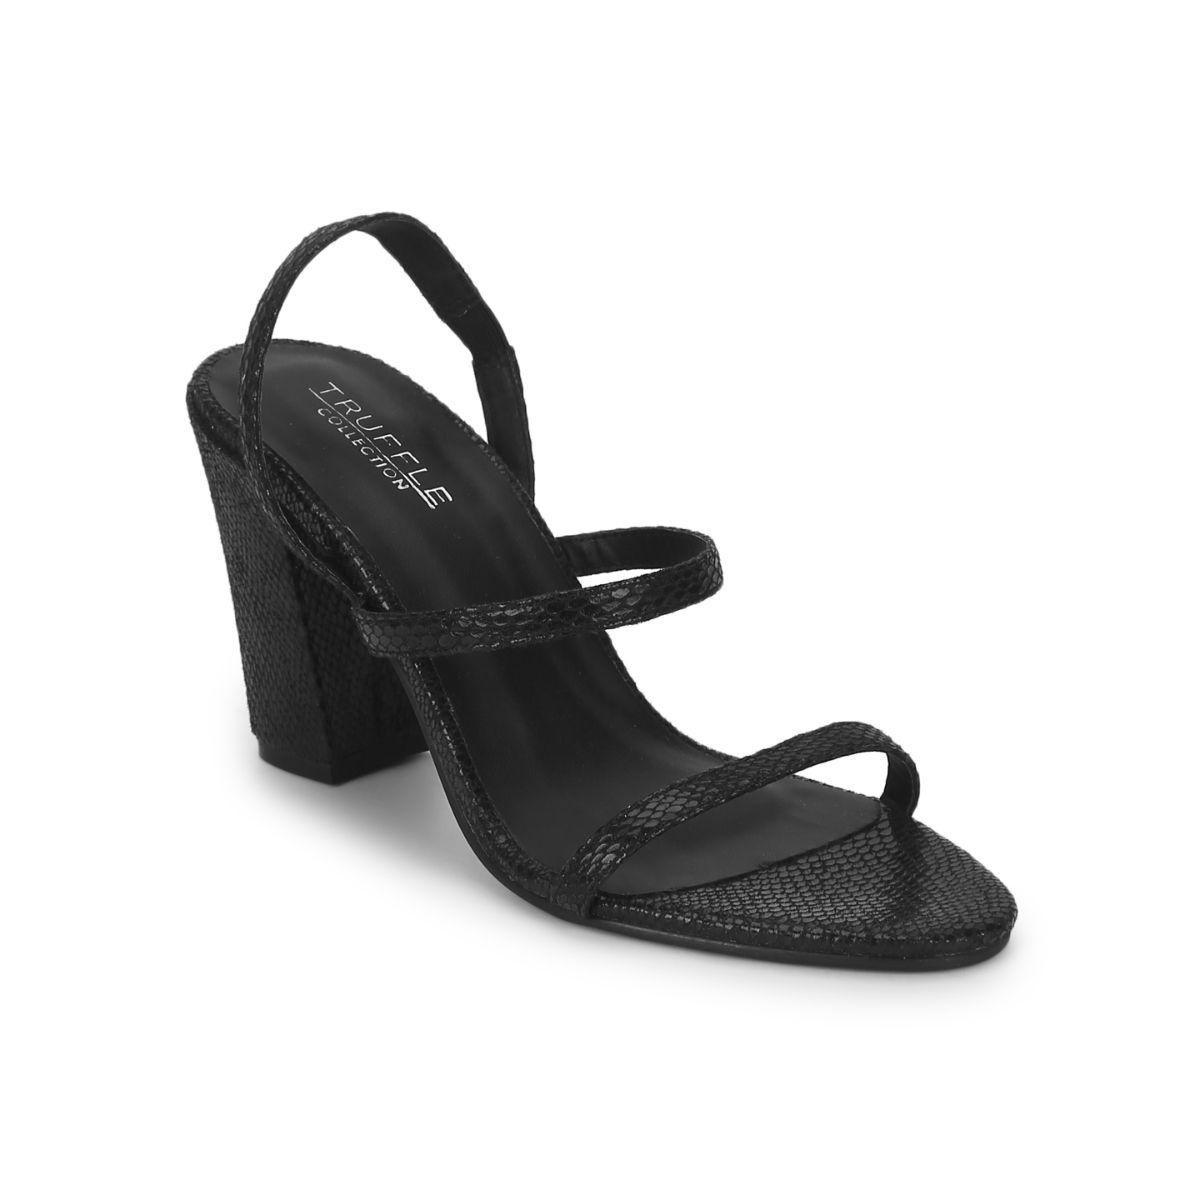 Buy Bugatti Sara Black Women Leather Flat Sandals UK-6 at Amazon.in